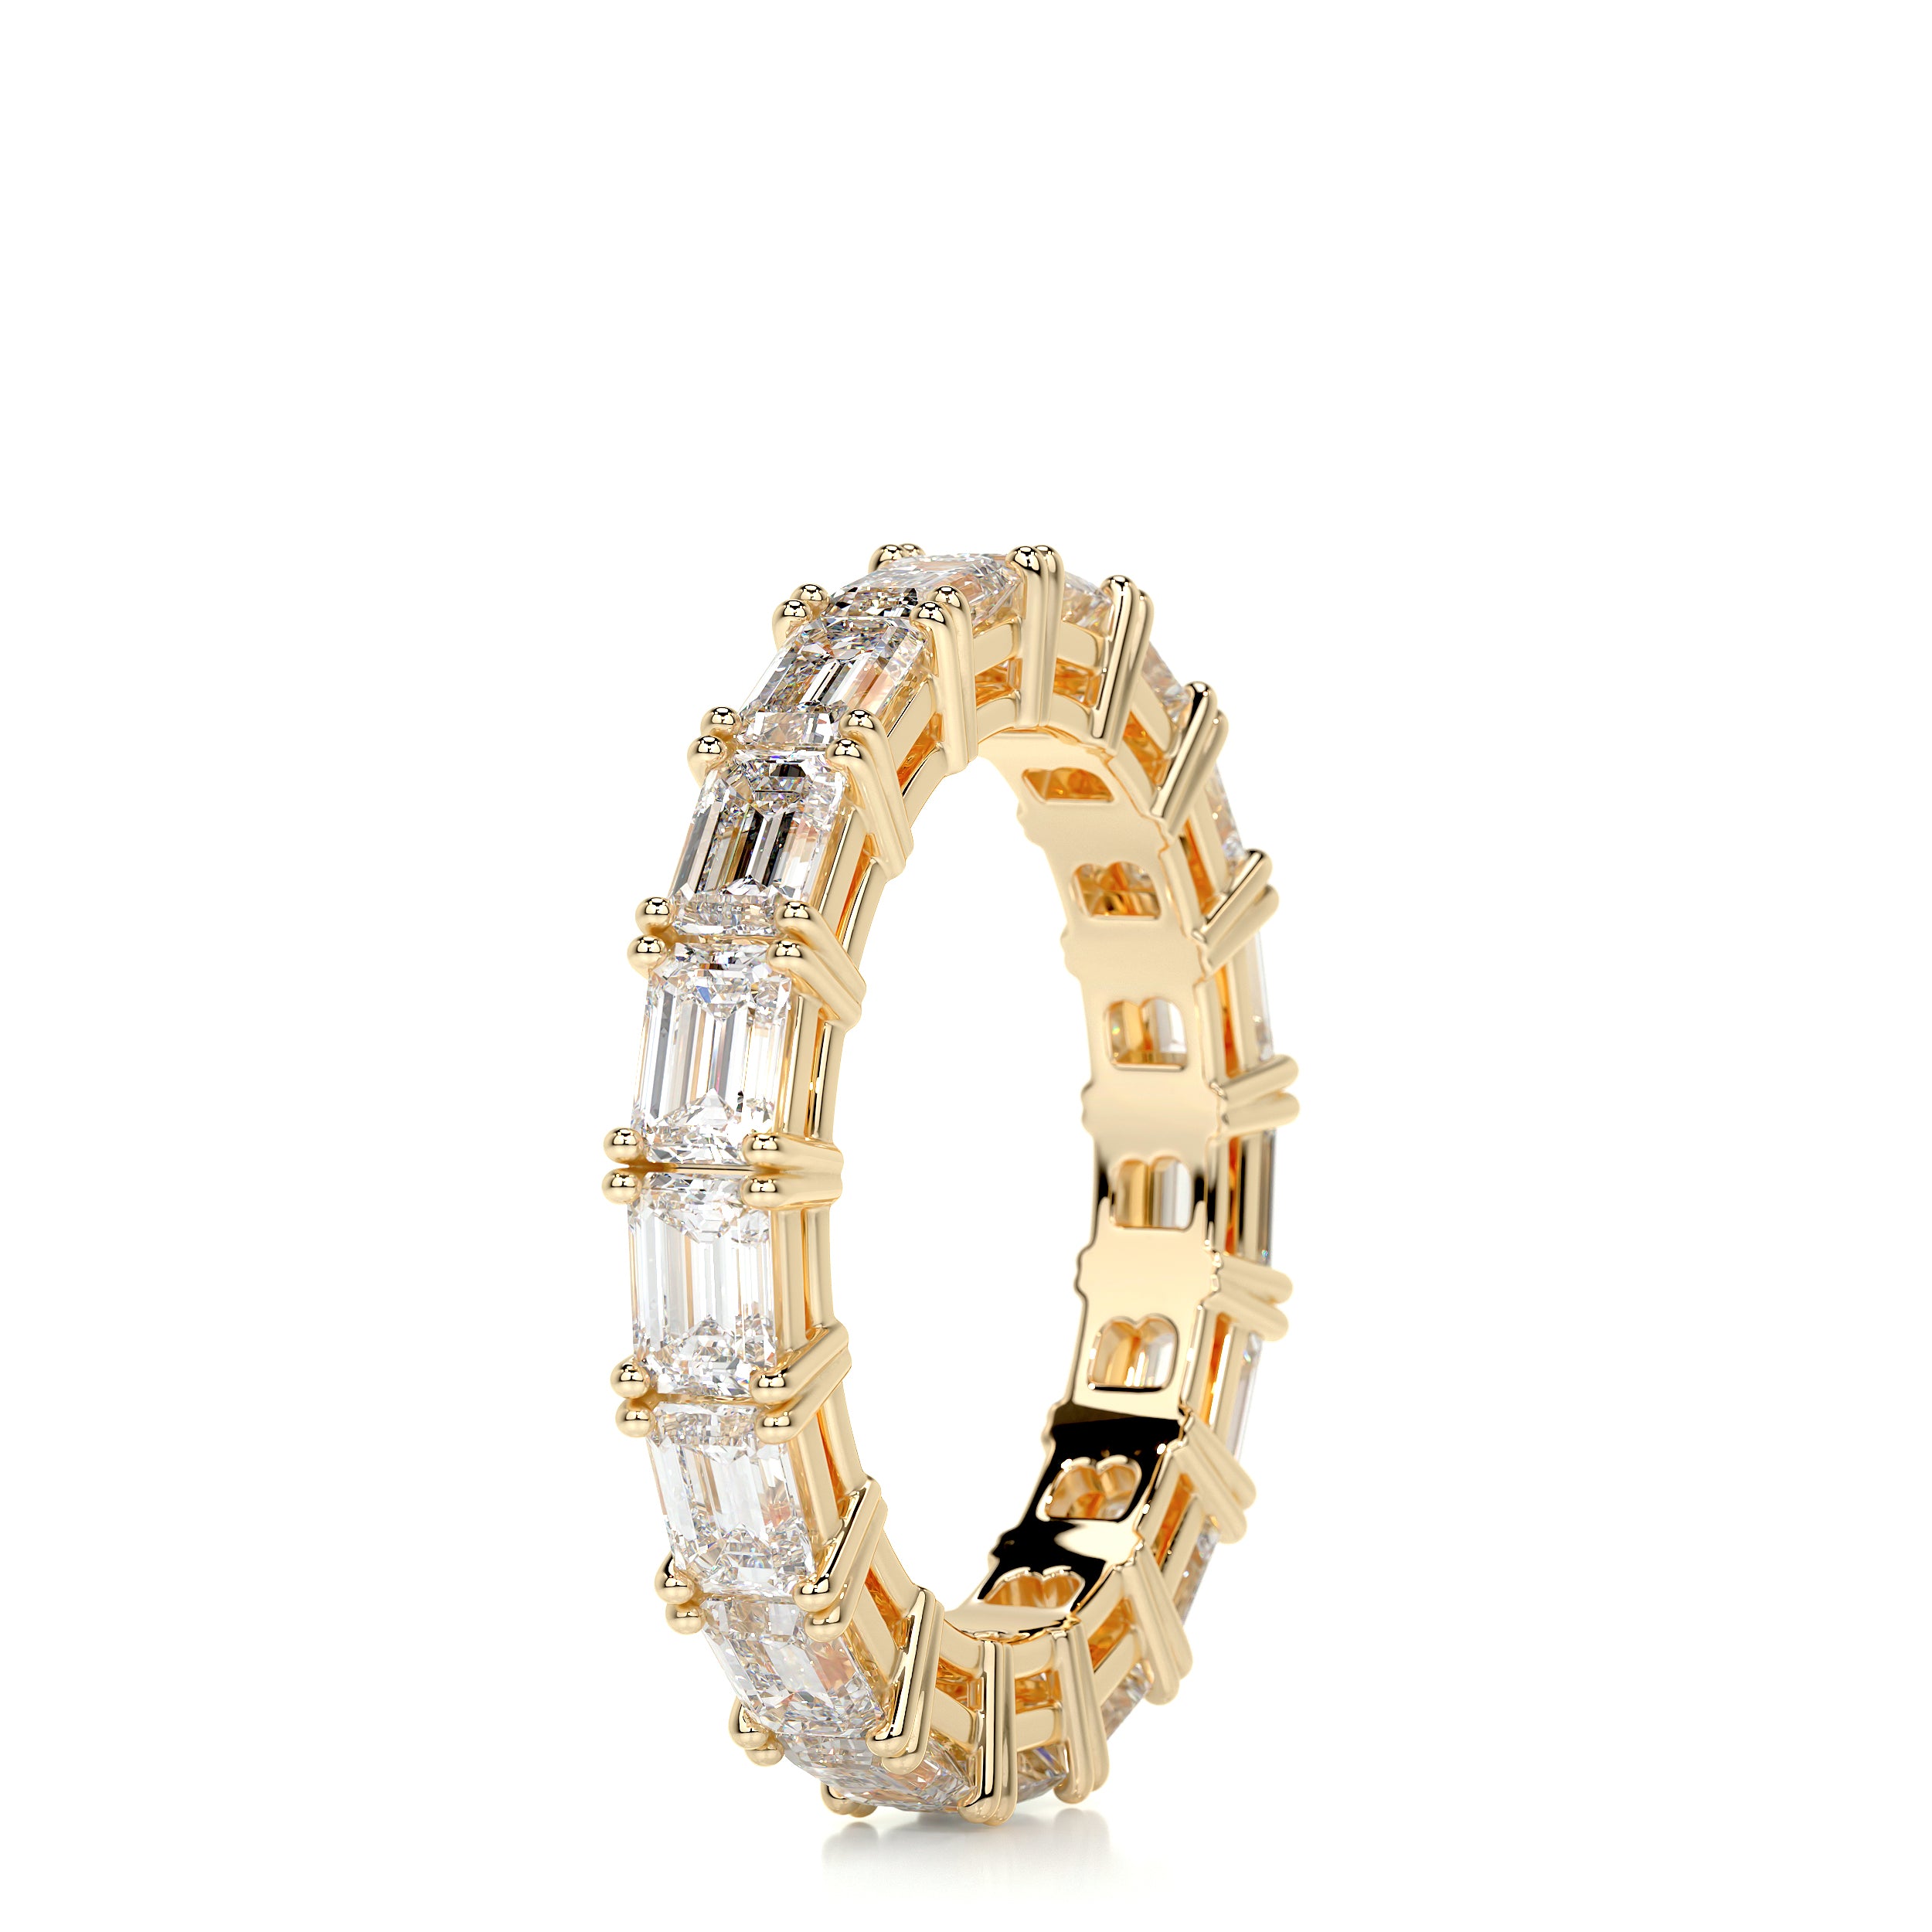 Vicky Diamond Wedding Ring   (3 Carat) -18K Yellow Gold